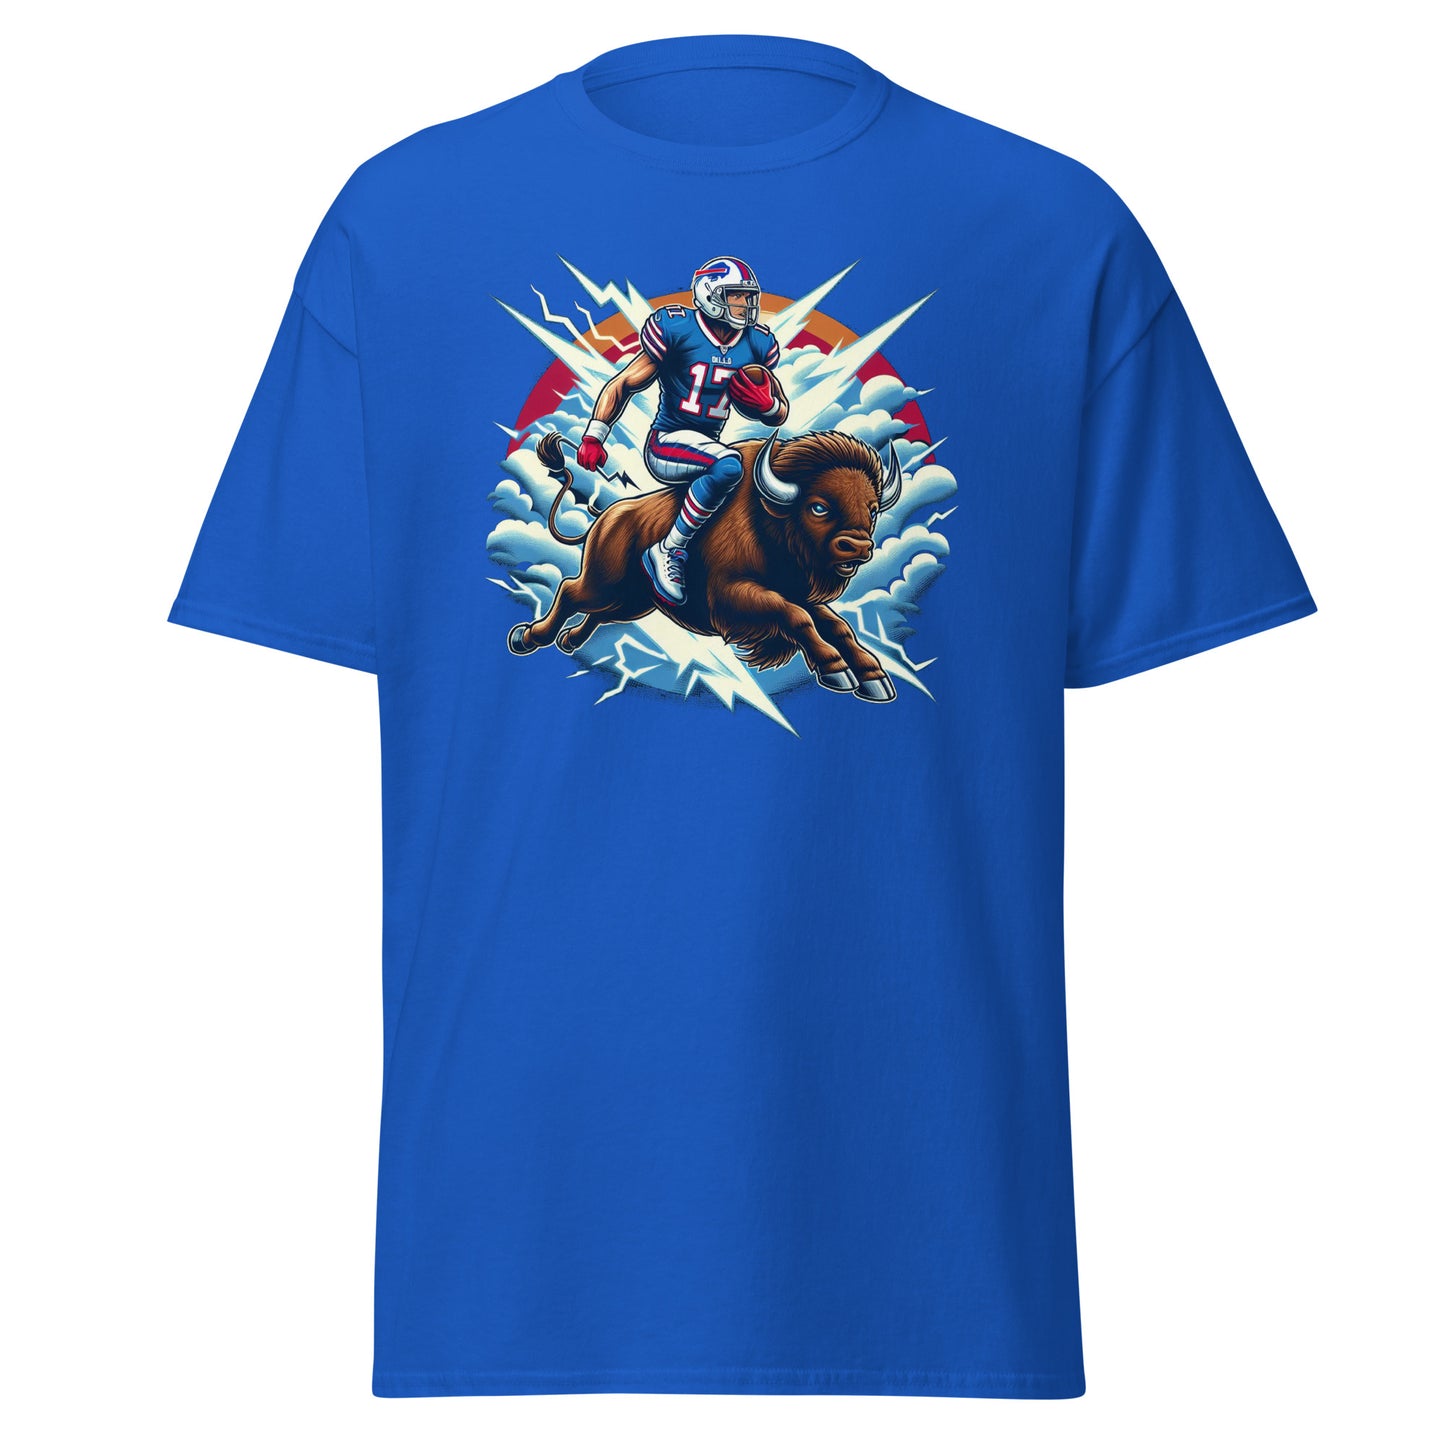 Buffalo Bills Stampede: Riding High T-Shirt - Wild West Edition